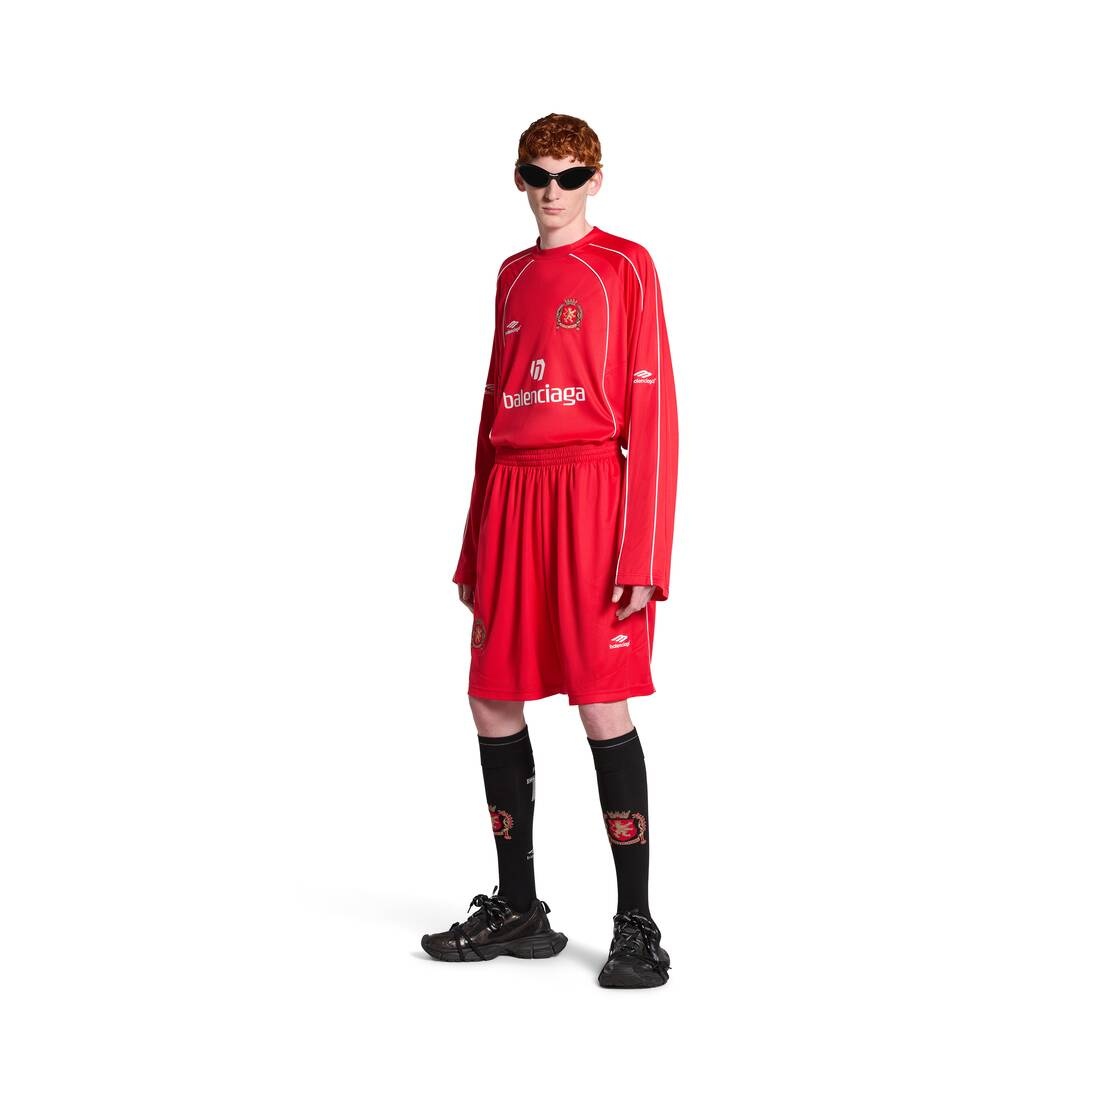 Men's Soccer Baggy Shorts in Red/white - 2